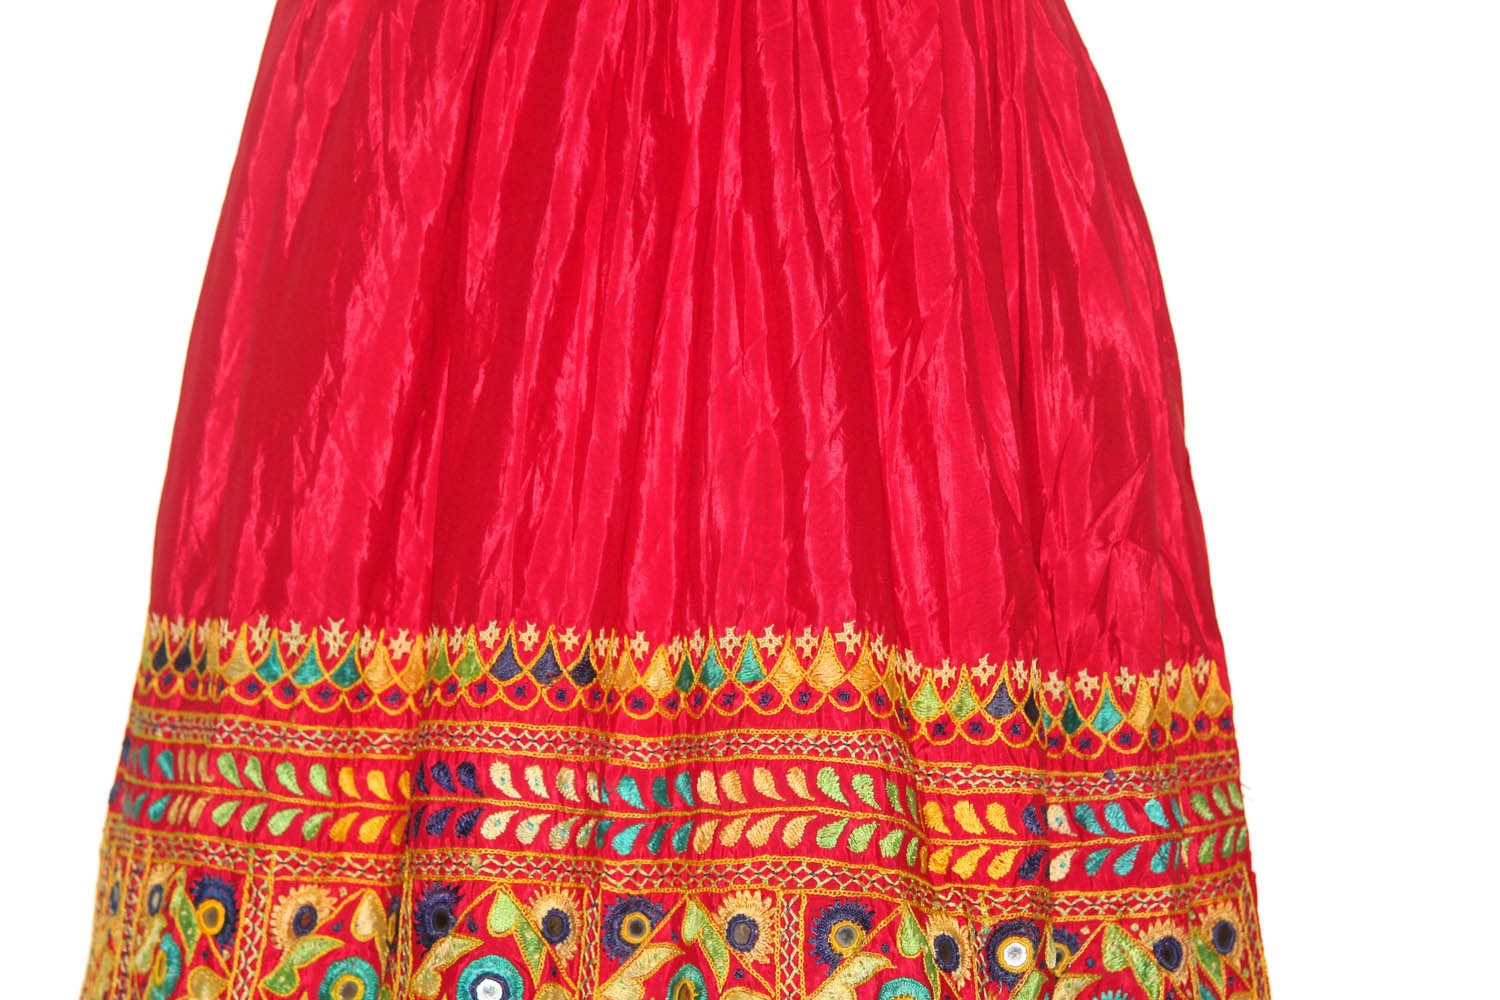 Authentic Vintage Ethnic Banjara Indian Gujarati Rabari Kutchi Gypsy Tribal 100% Handmade Old Embroidered Mirror Work Girl's Kurta Top Dress